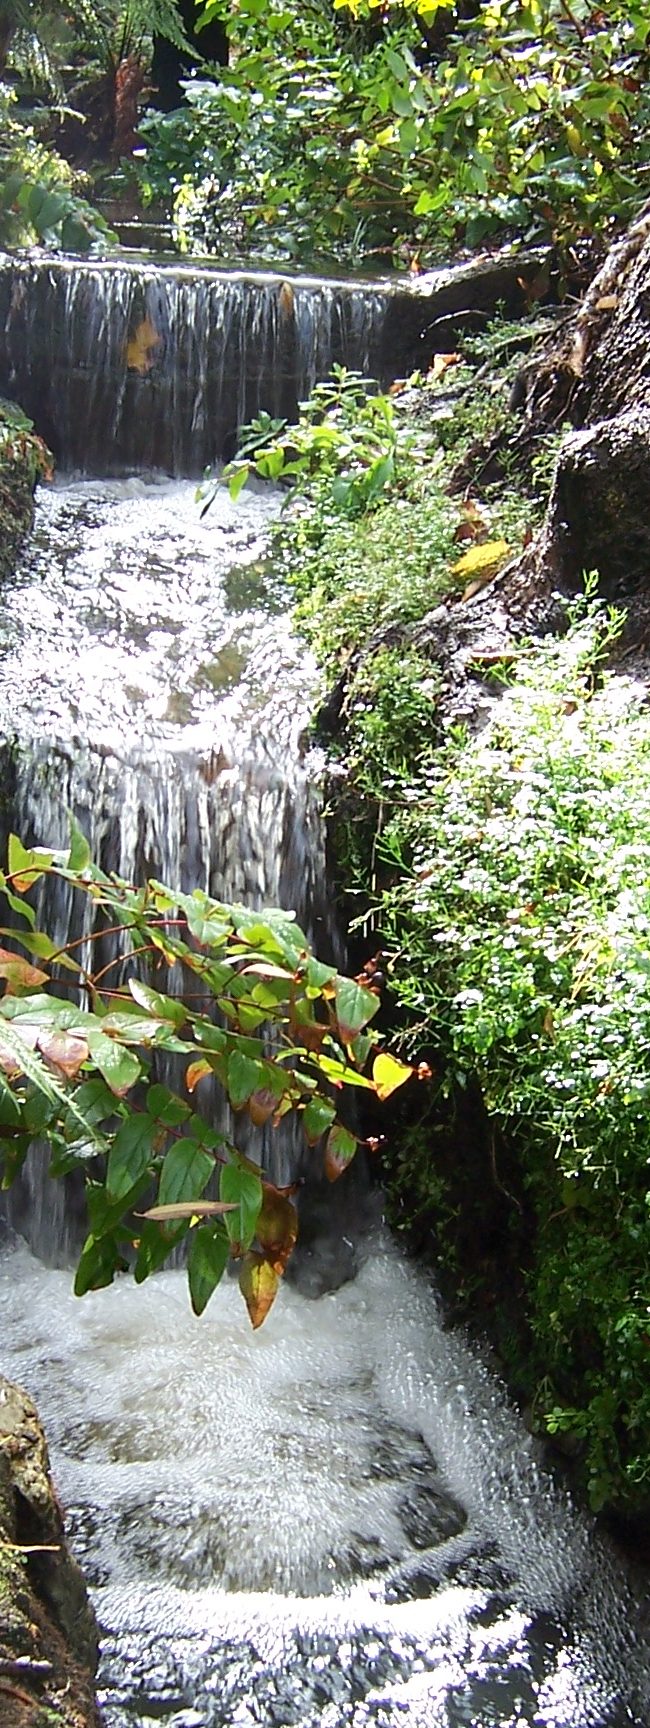 Creek Waterfall